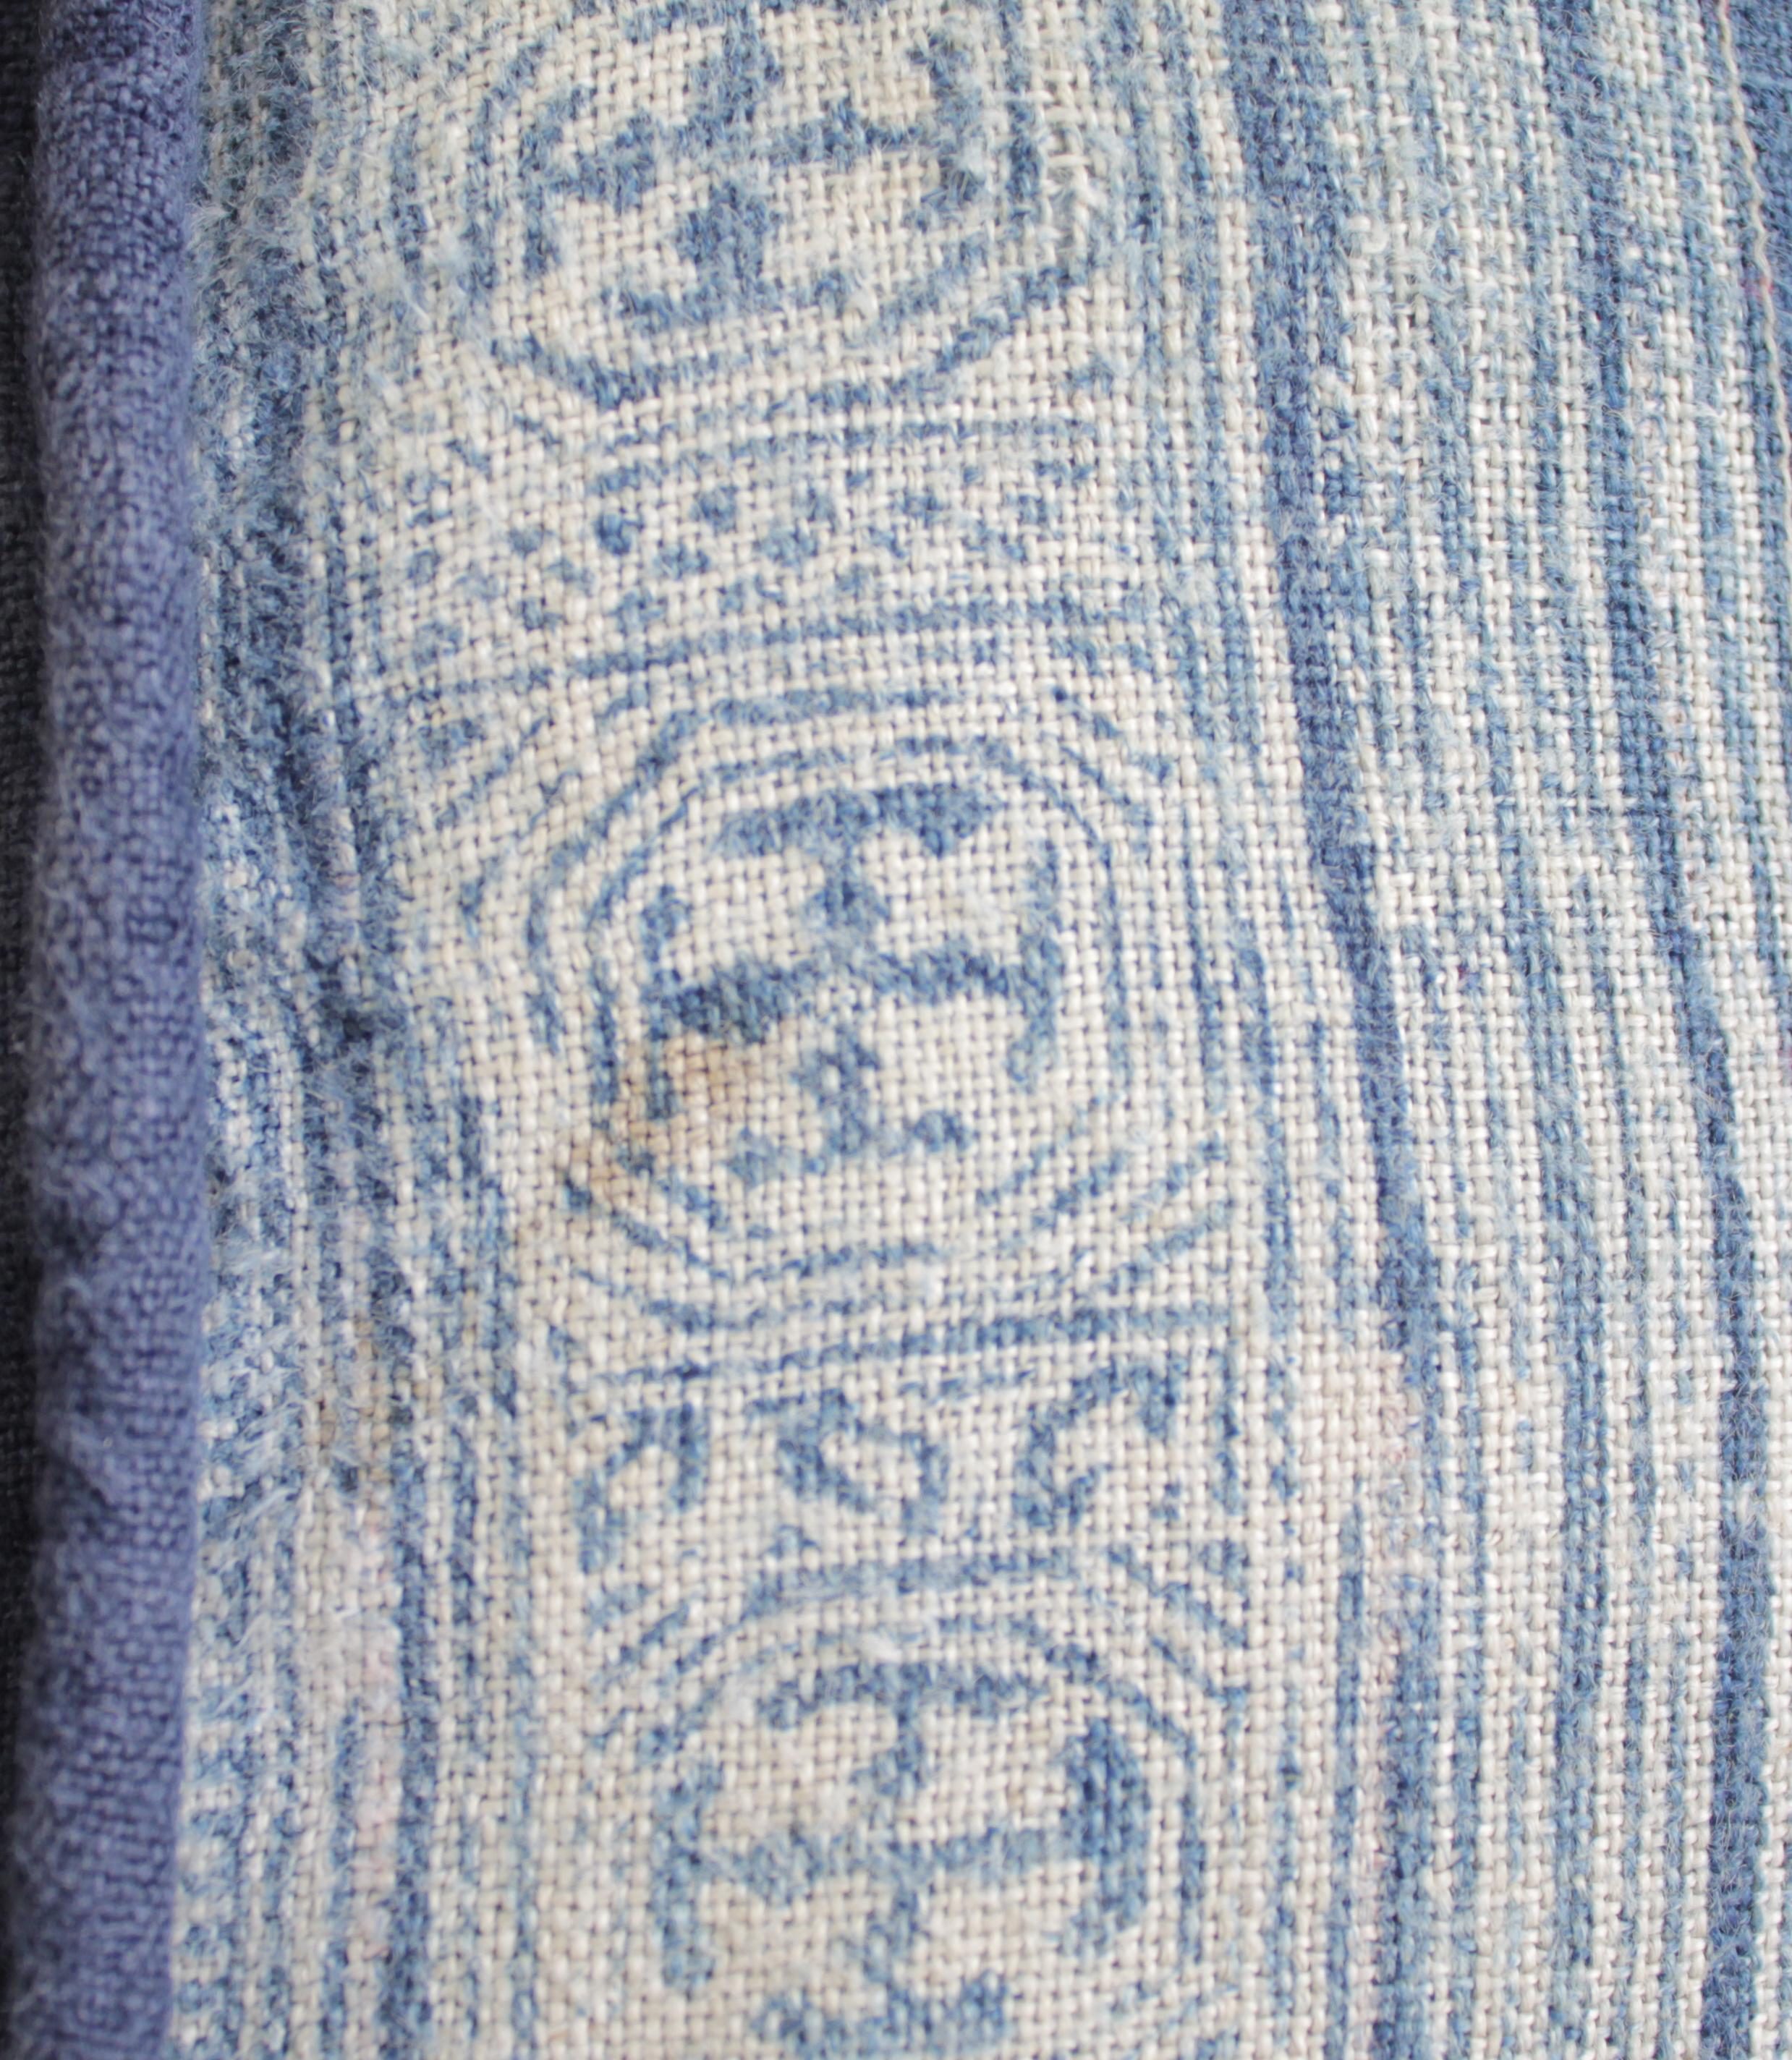 Vintage Indigo Blue and White Batik Pattern Pillow 7